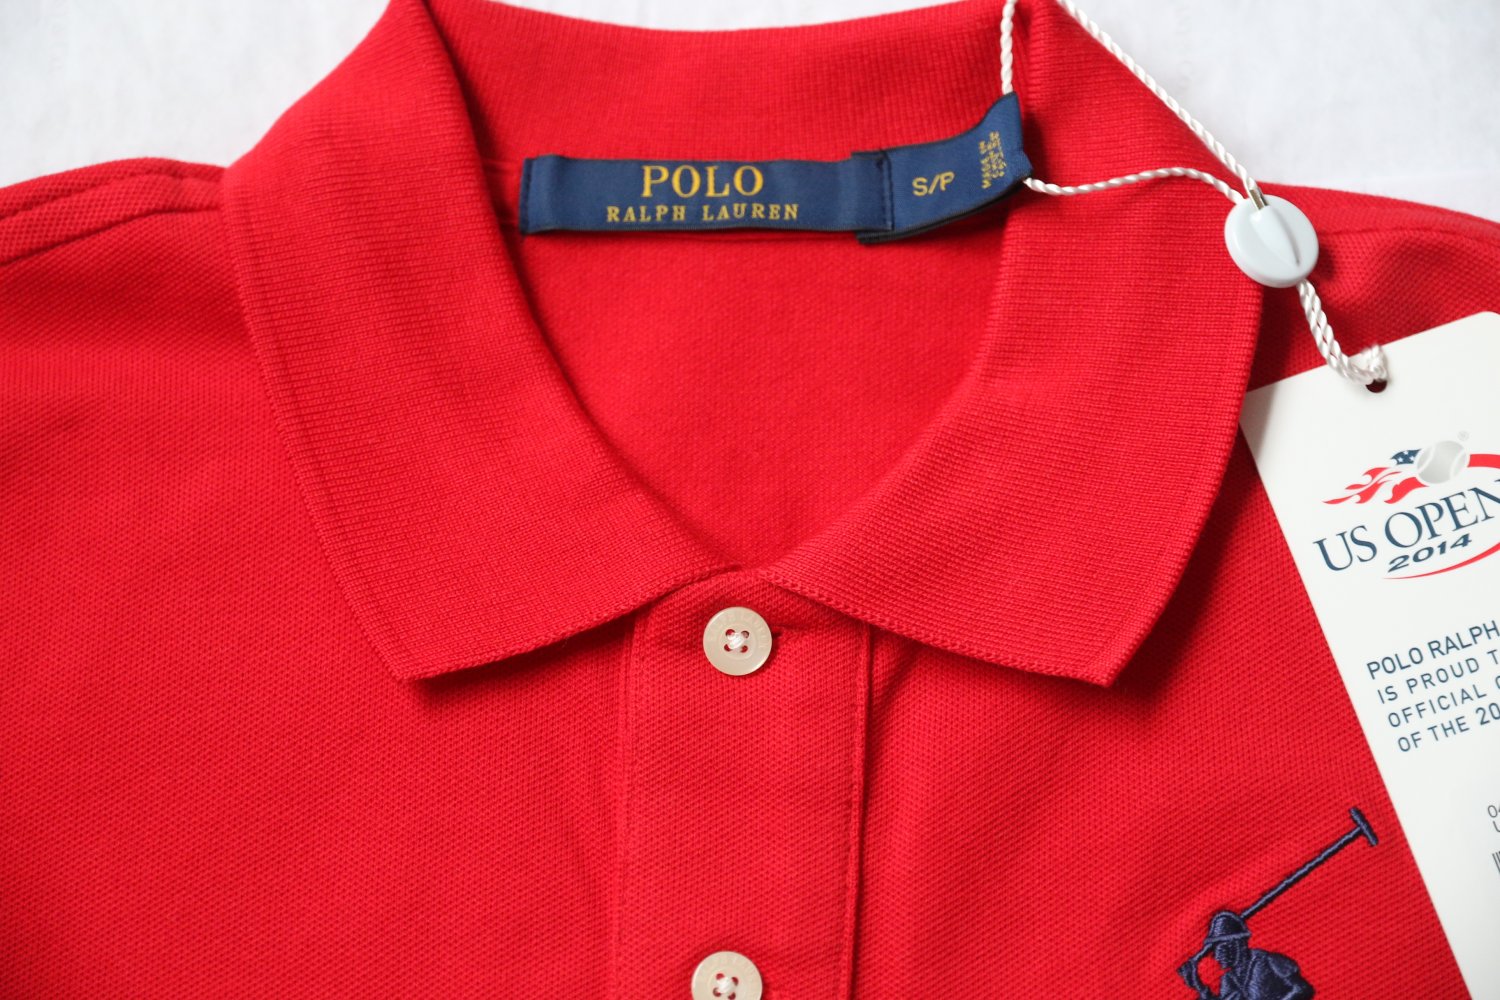 NWT Ralph Lauren Women`s Big Pony Polo Shirt S Red US Open Cotton Top New